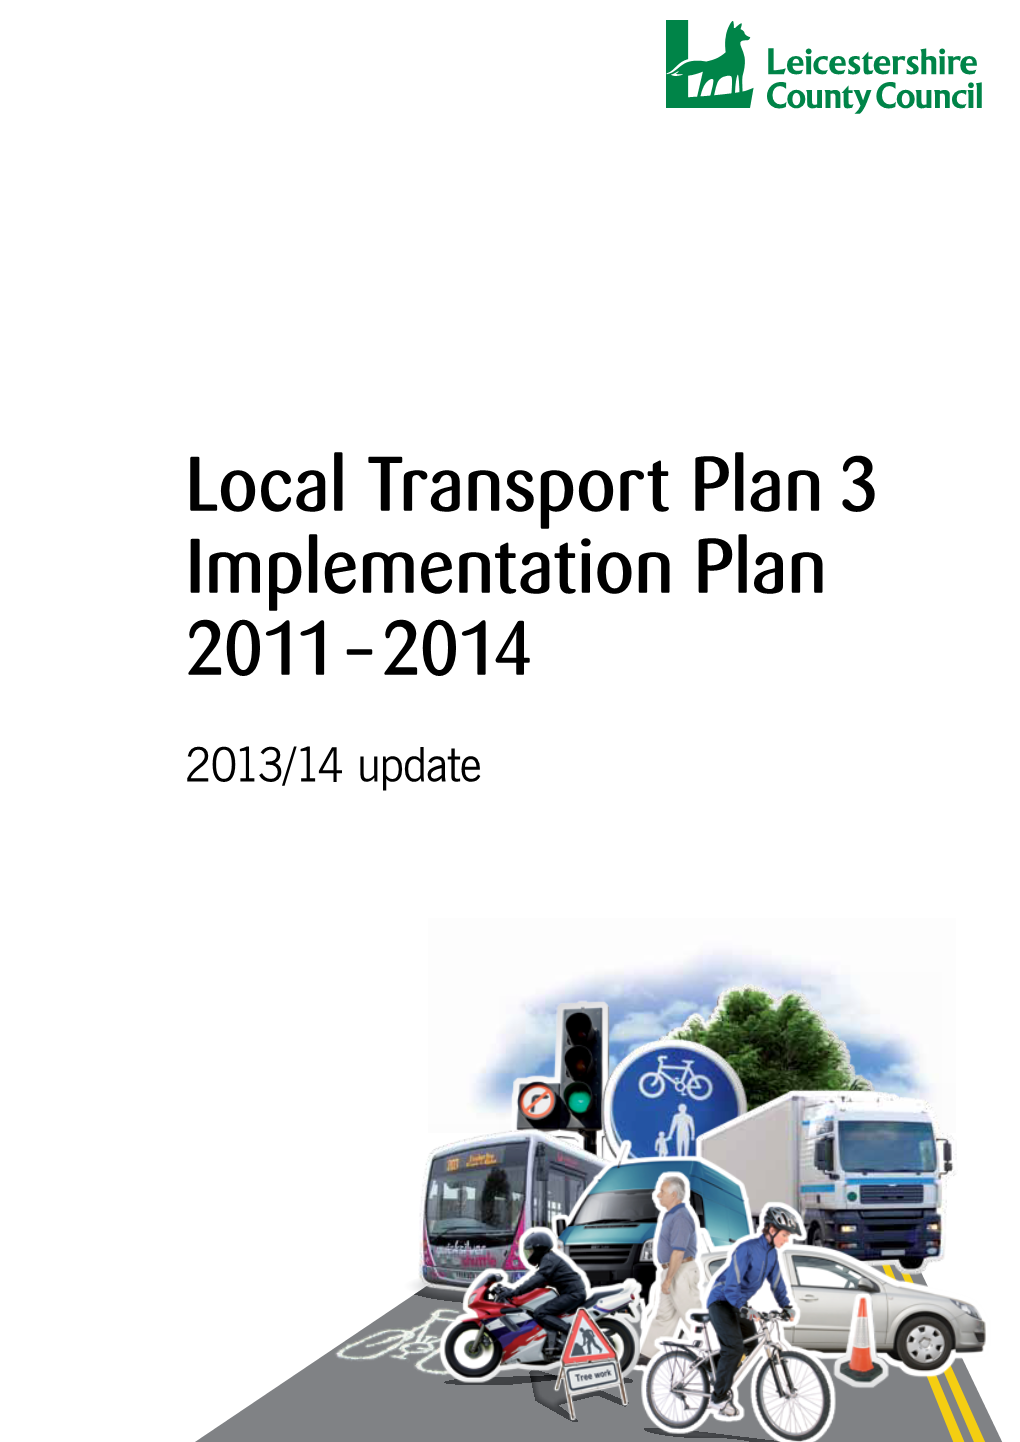 Local Transport Plan Implementation Plan 2011-14